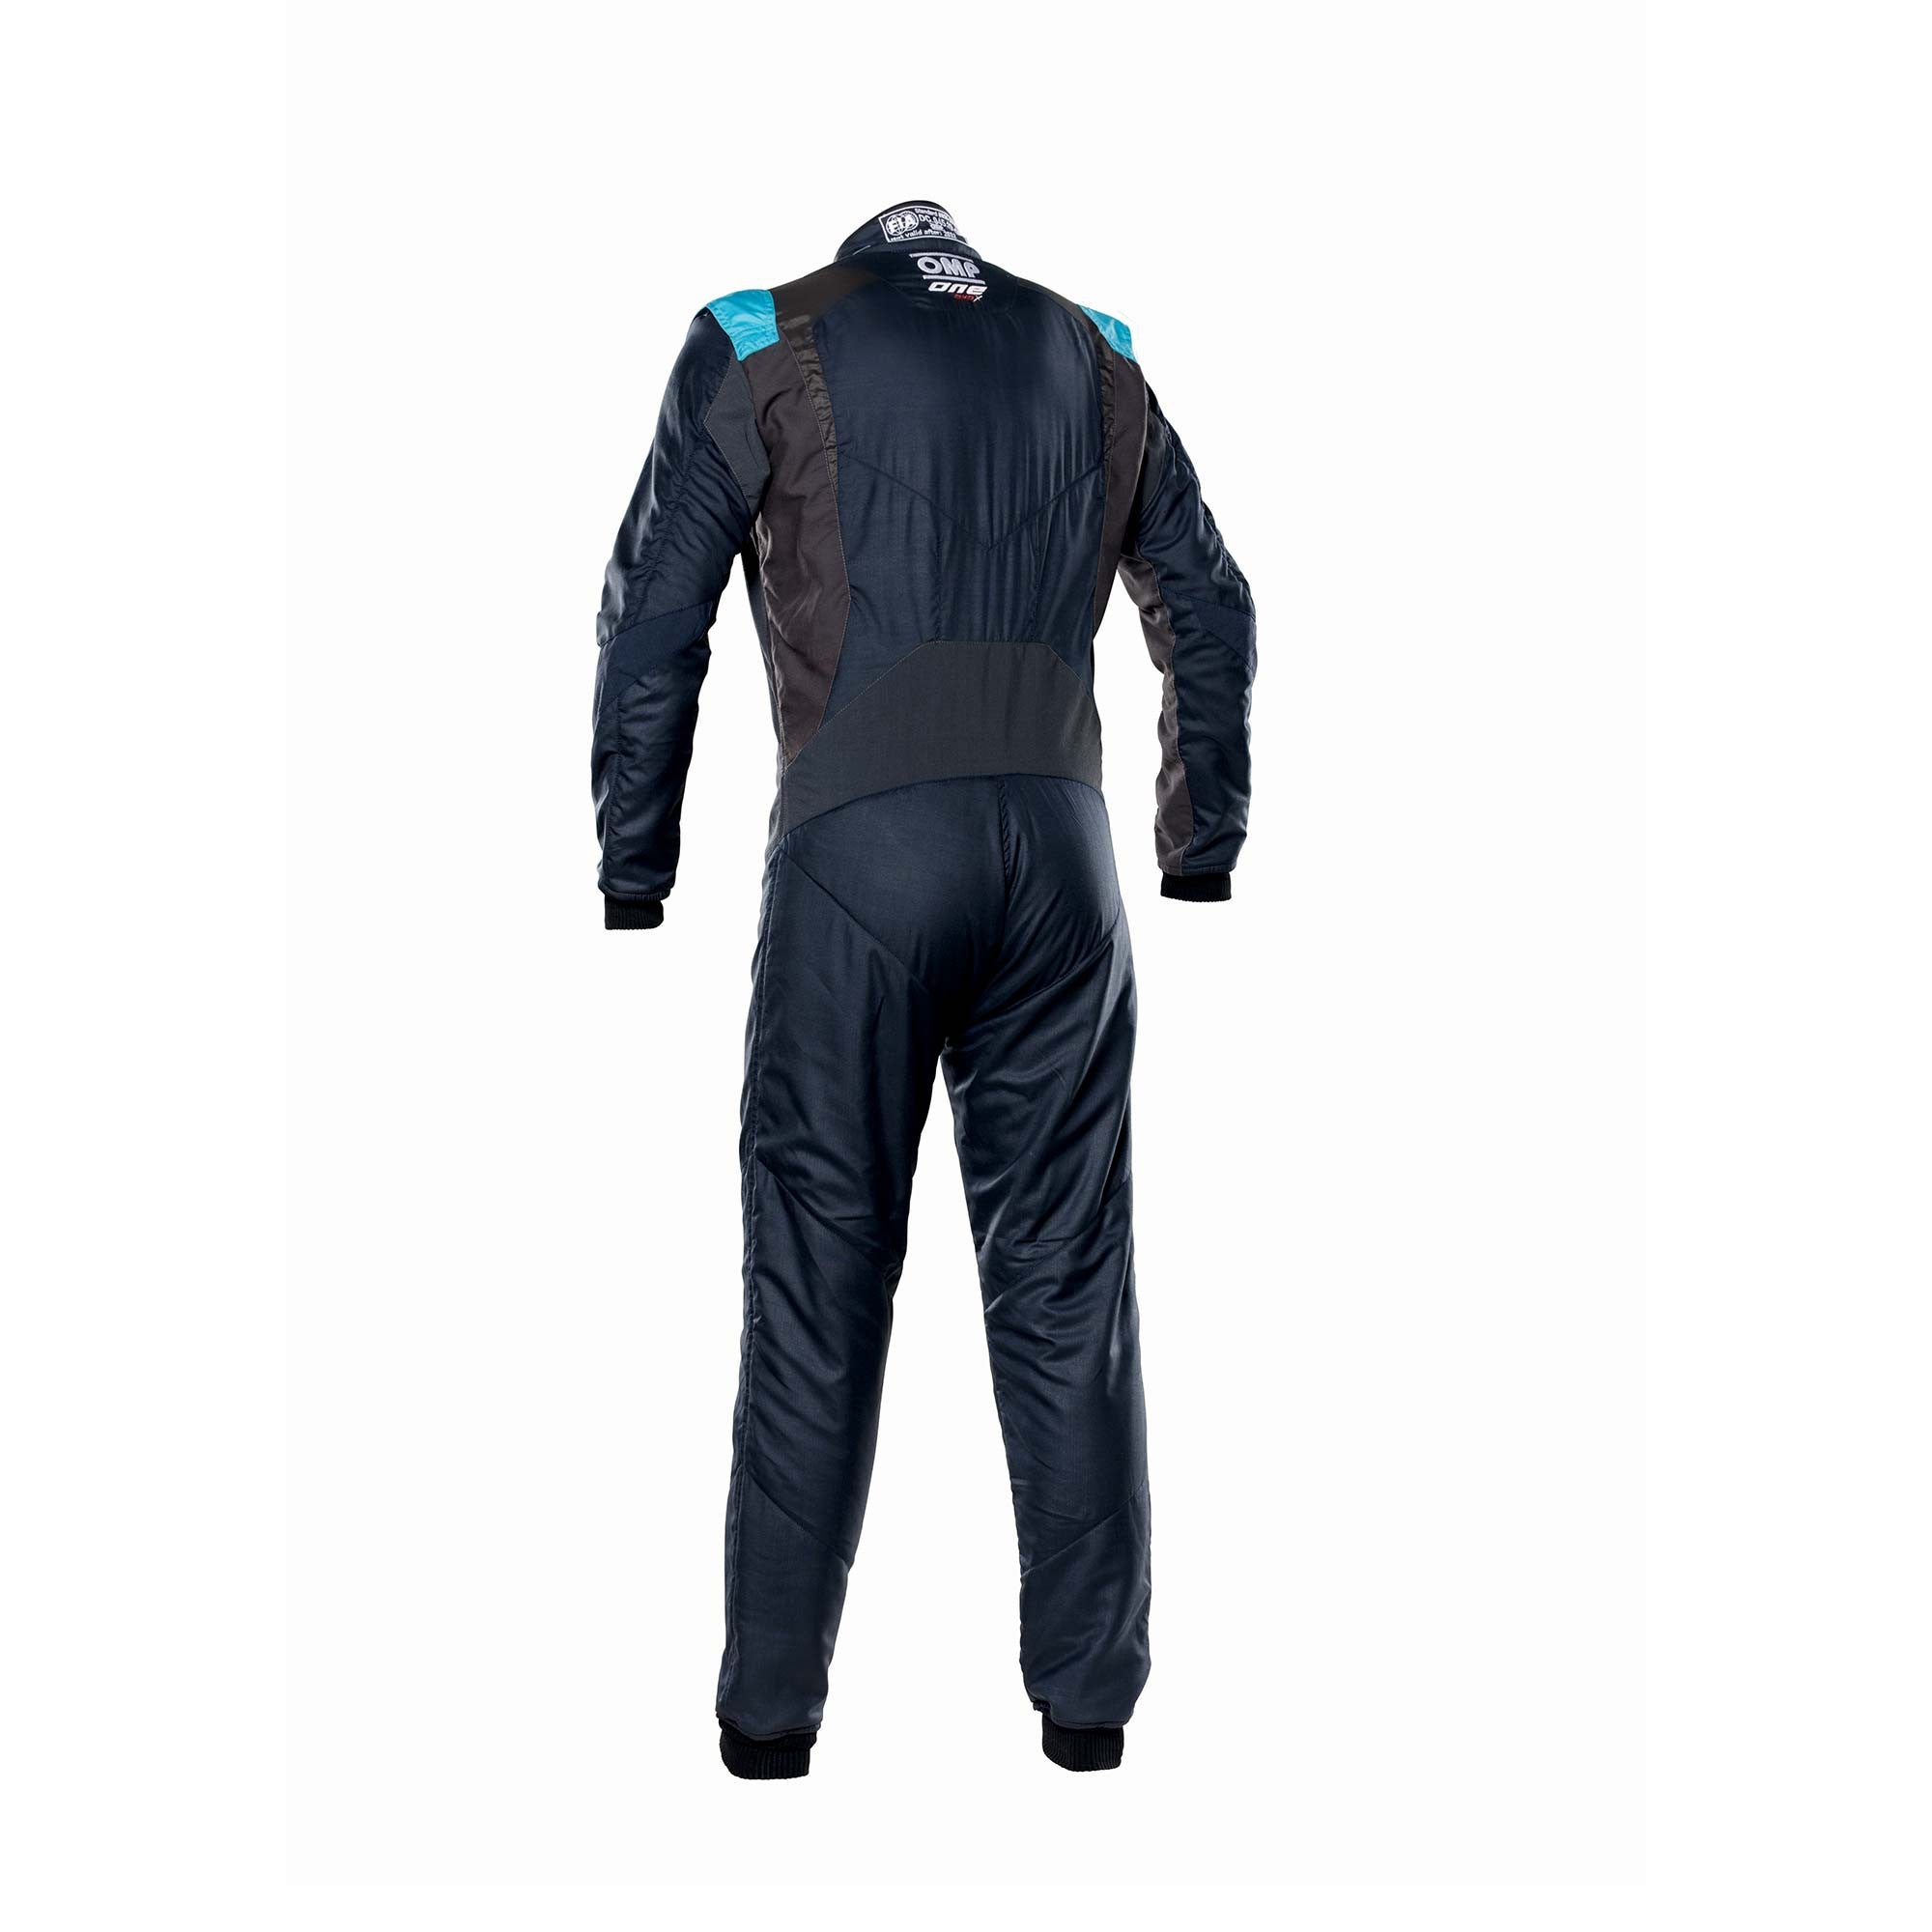 OMP IA0-1861-A01-246-54 Racing suit ONE EVO X, FIA 8856-2018, navy blue/gray/cyan, size 54 Photo-1 